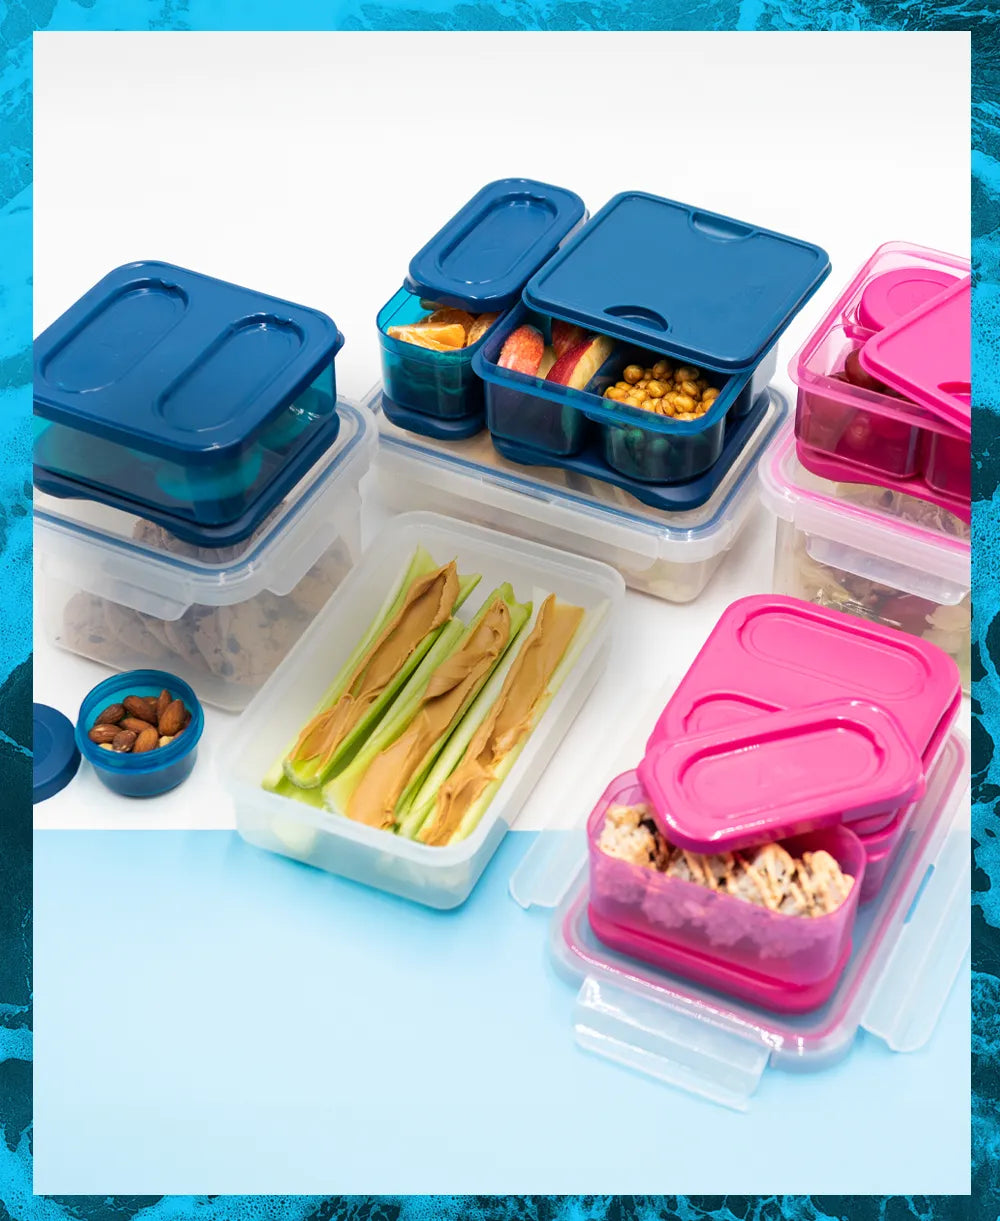 Thermos Food Storage System, Lunch Box, Kids Bento Box, 8pc Navy